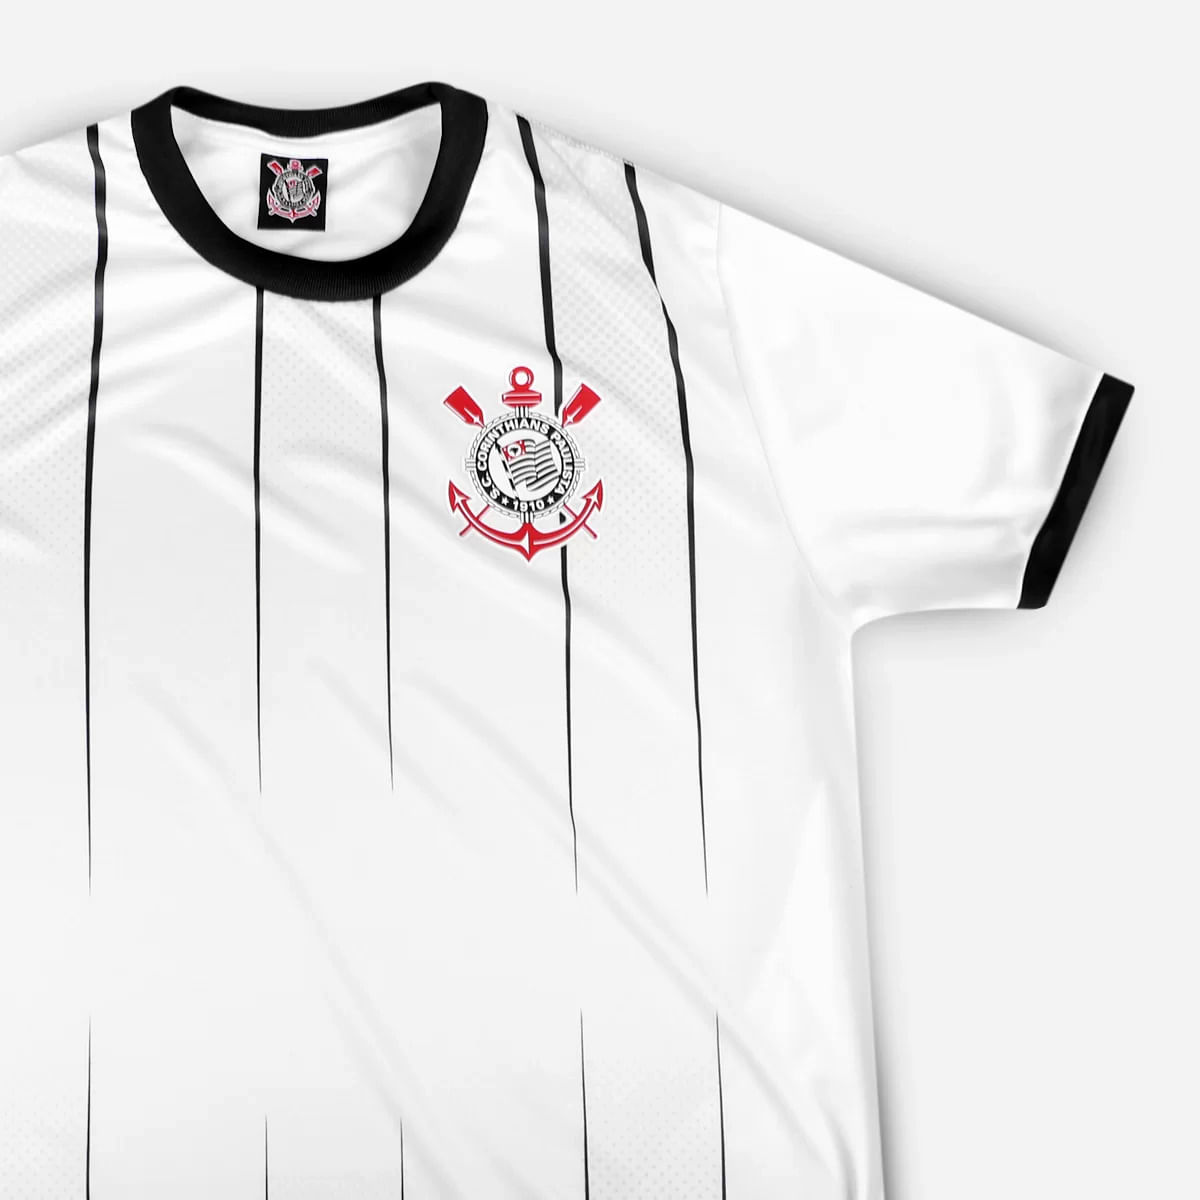 Camiseta Corinthians Layer Preto/Branco